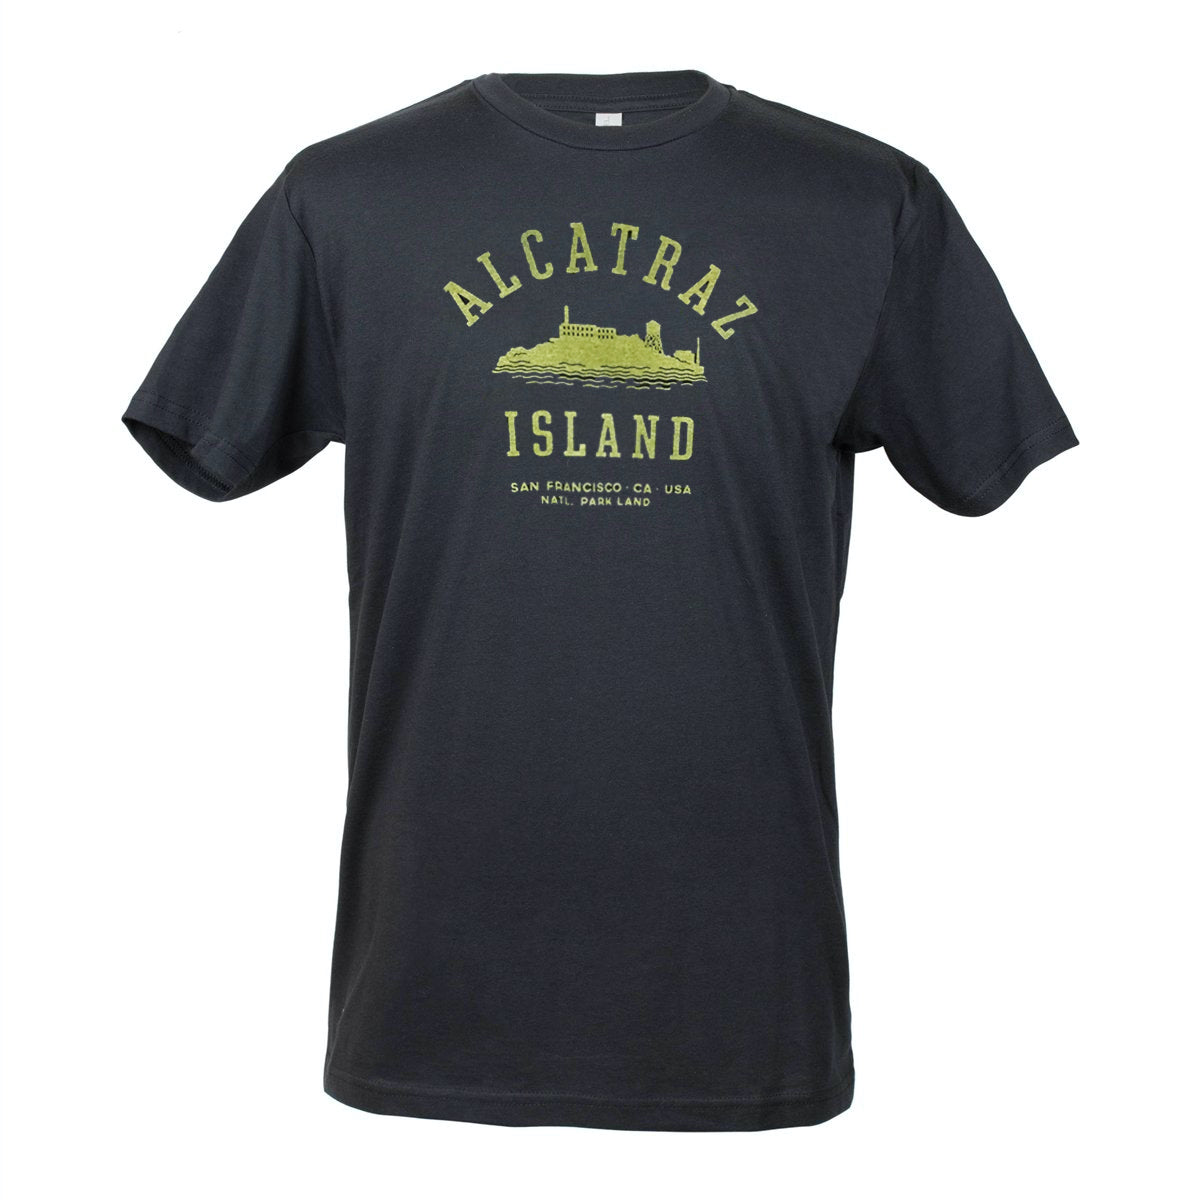 Black crew neck t-shirt with yellow screen-printed Alcatraz Island illustration on chest. Design depicts silhouette of Alcatraz Island with text reading “Alcatraz Island San Francisco CA USA Nat’l Parkland”.